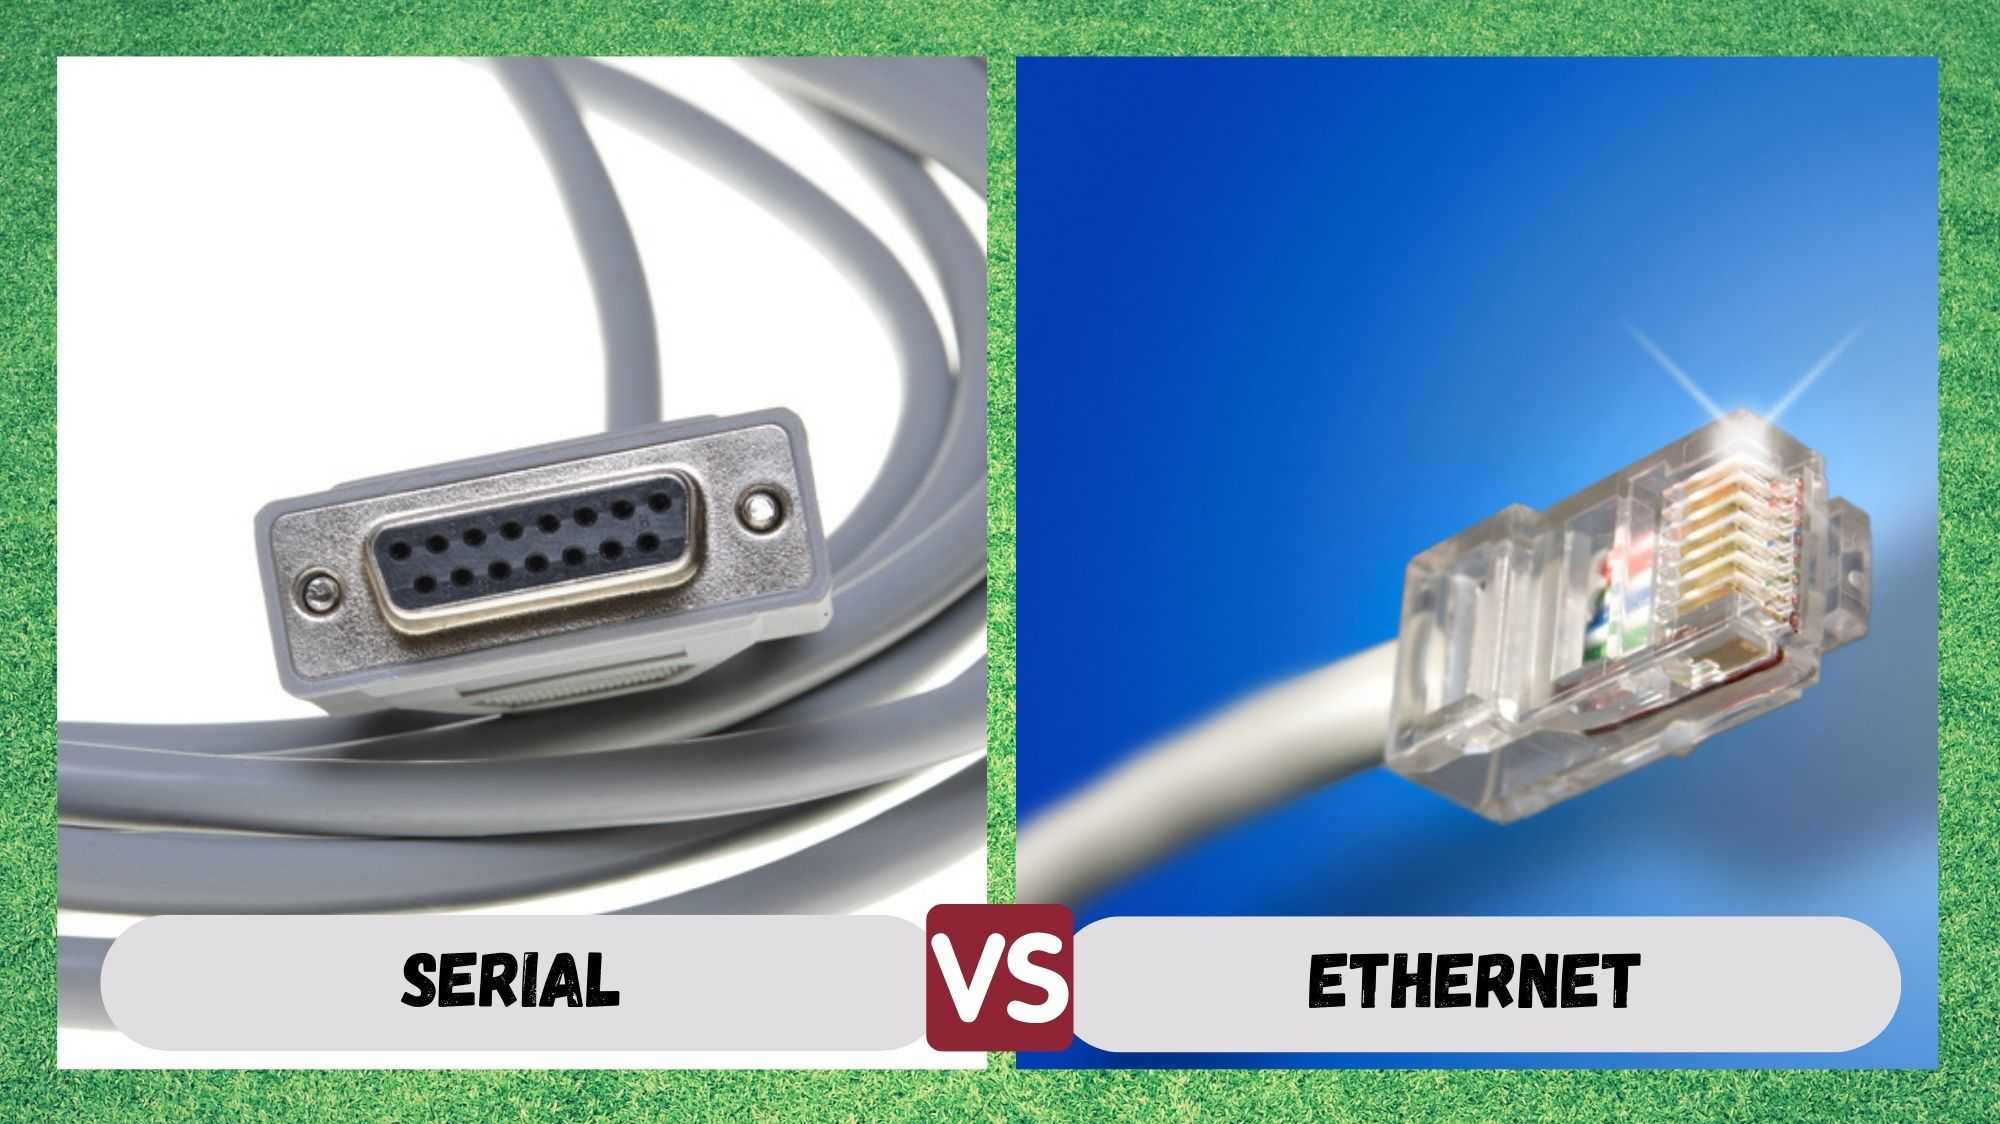 Sreathach vs Ethernet: Dè an diofar?